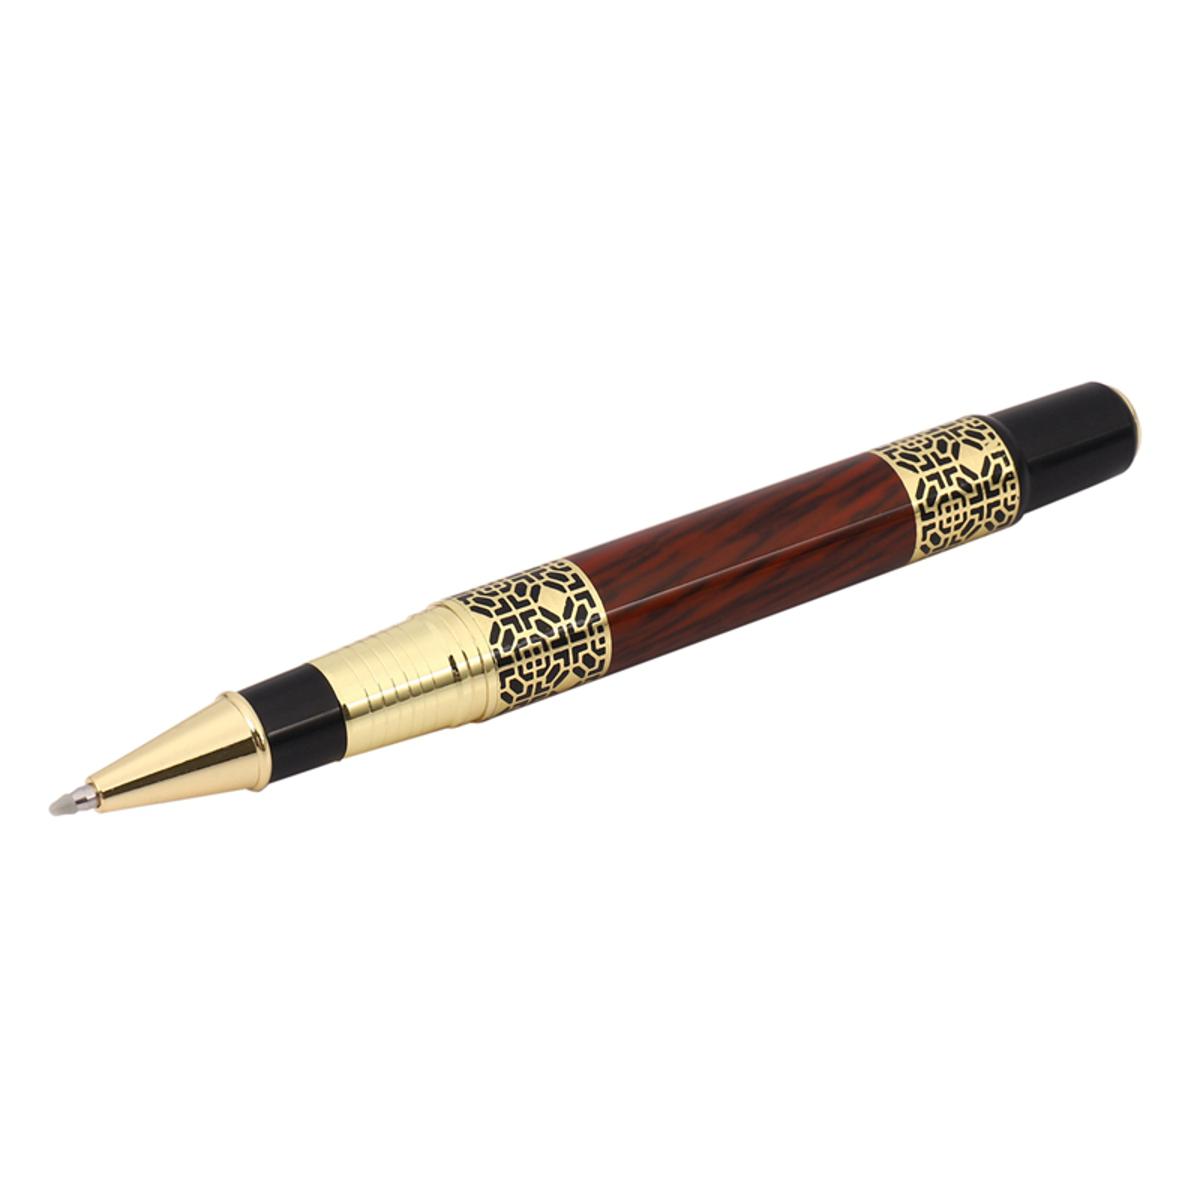 8Pcs Black Thin Liner Pens Mini Liner Fineliner Drawing Pens for